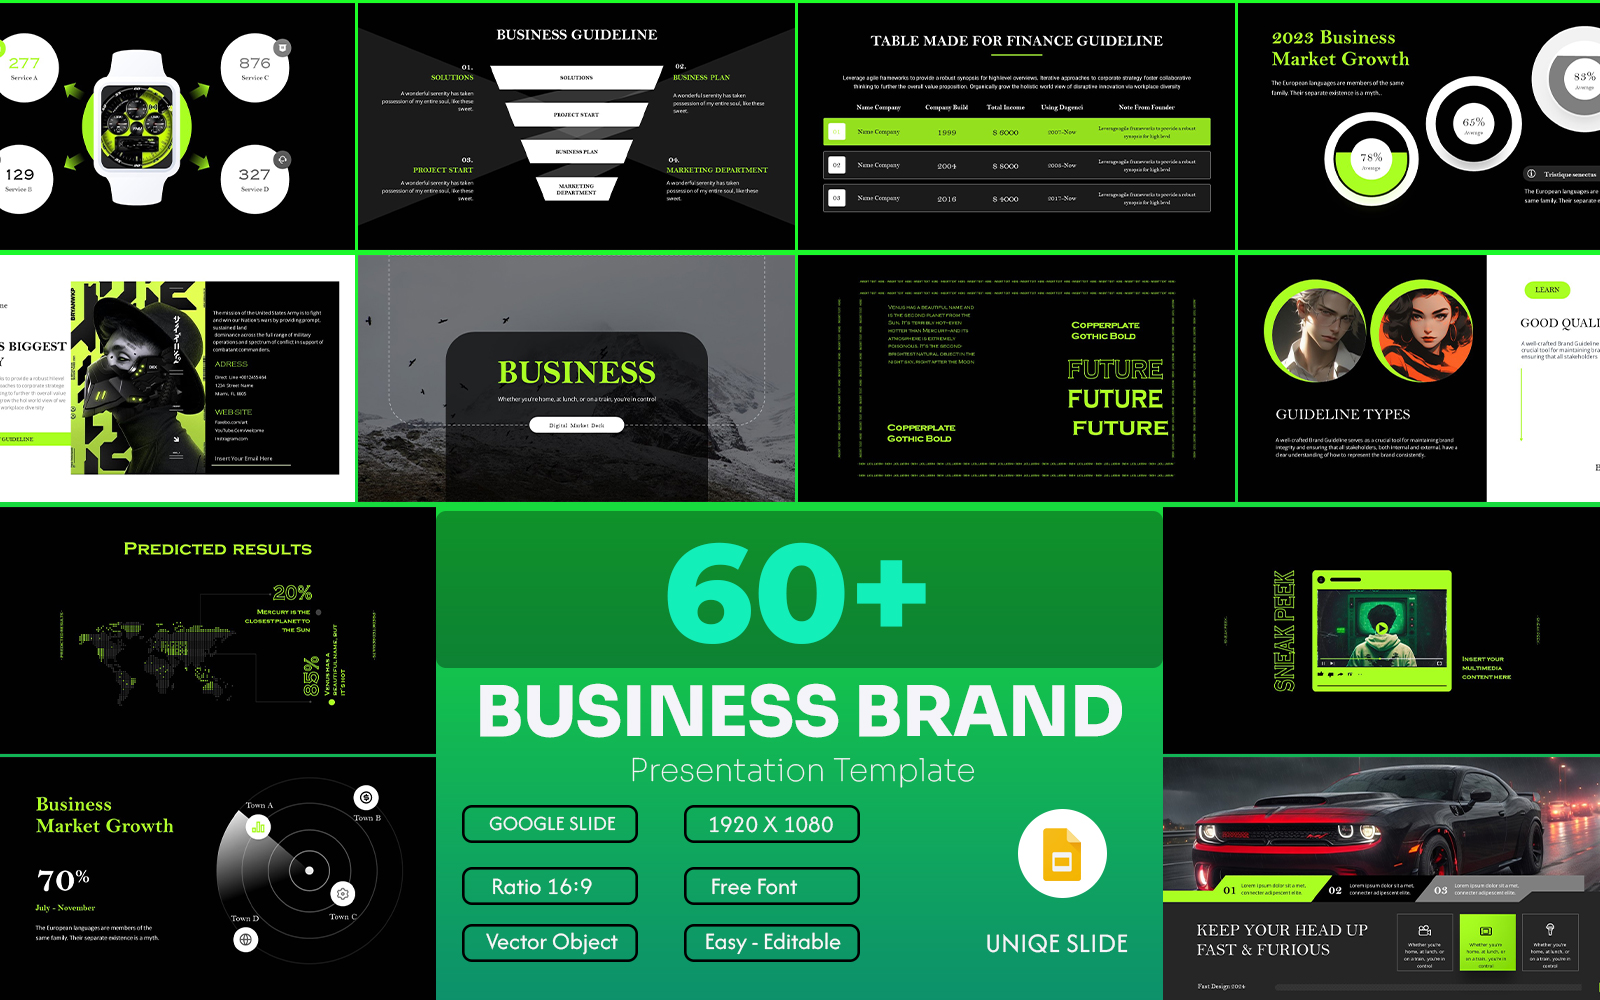 Business Brand Google Slide Presentation Template